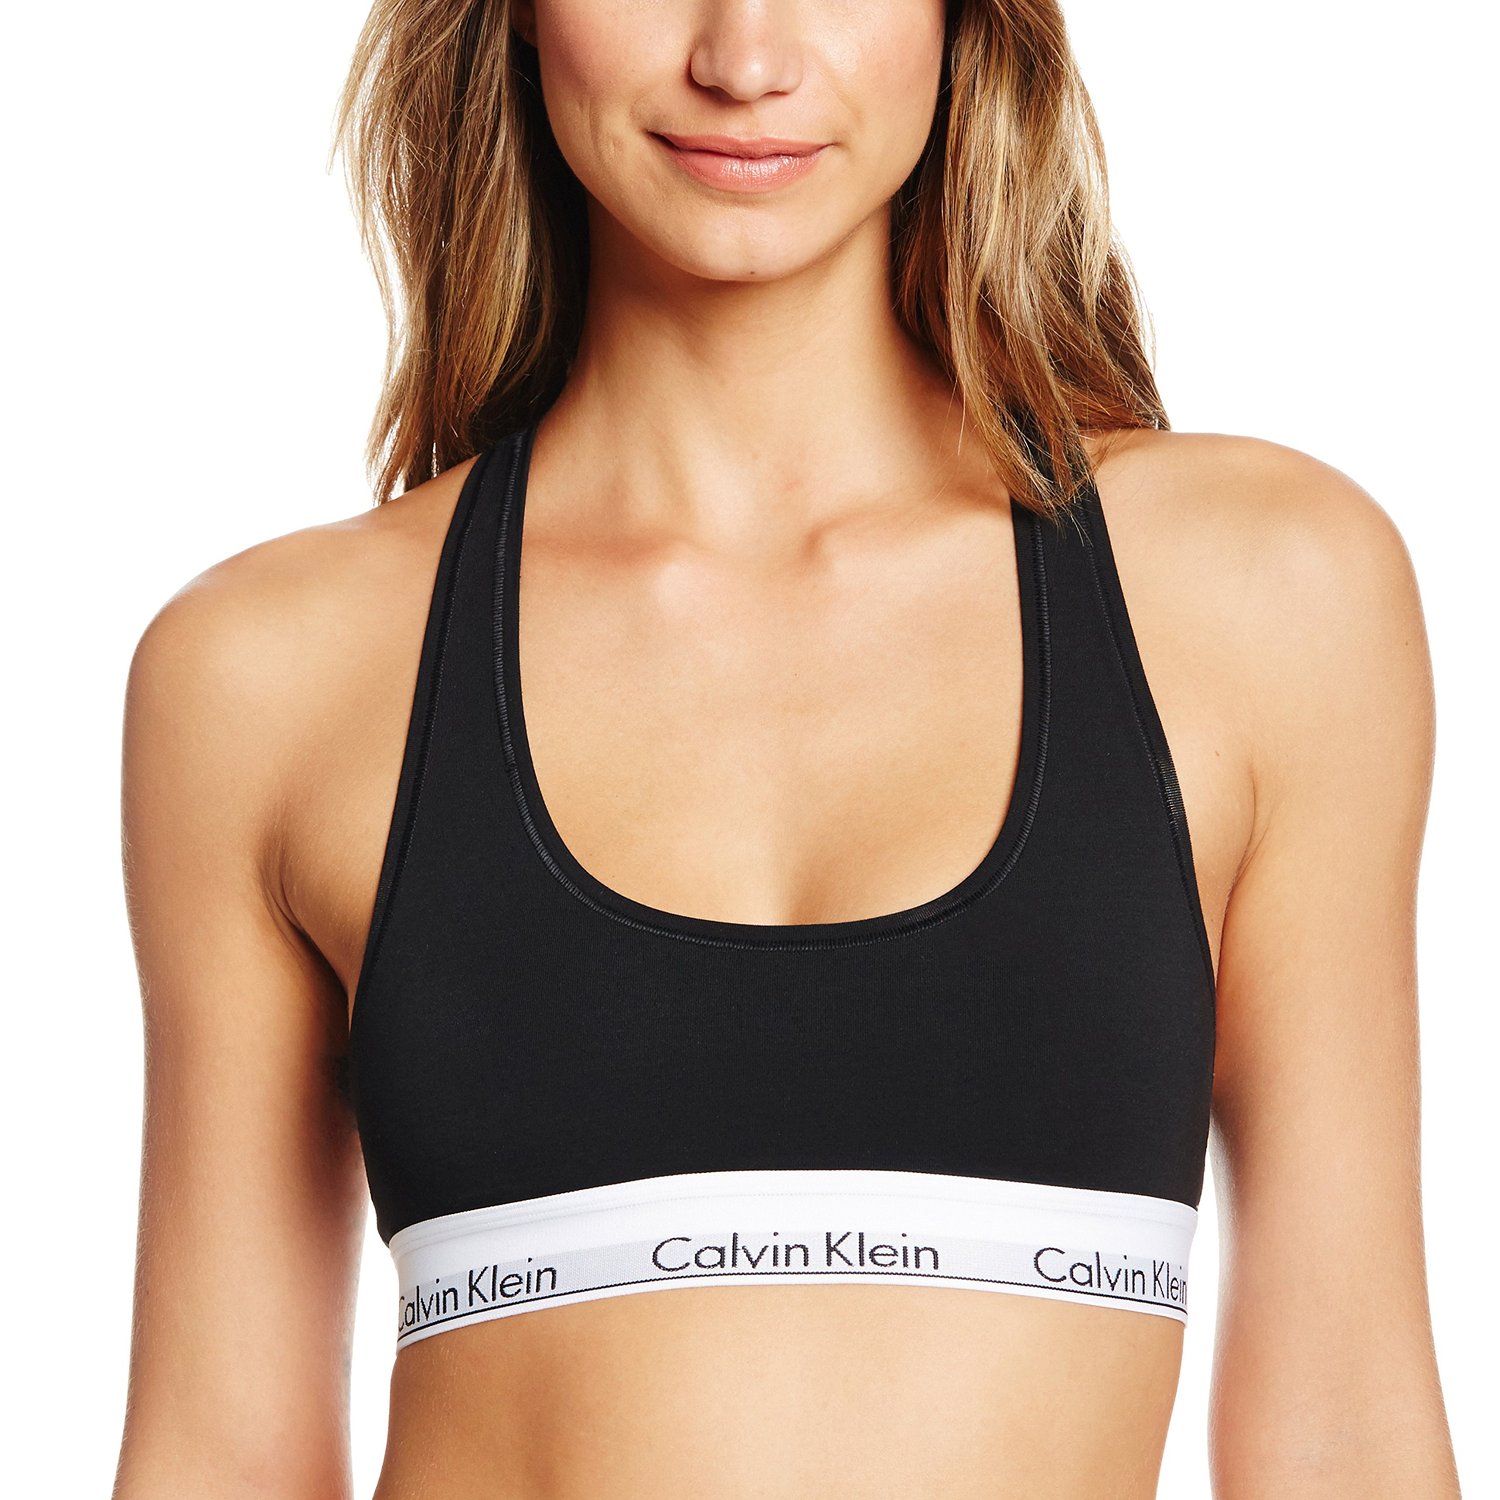 Calvin Klein soft bra- is it worth the hype?